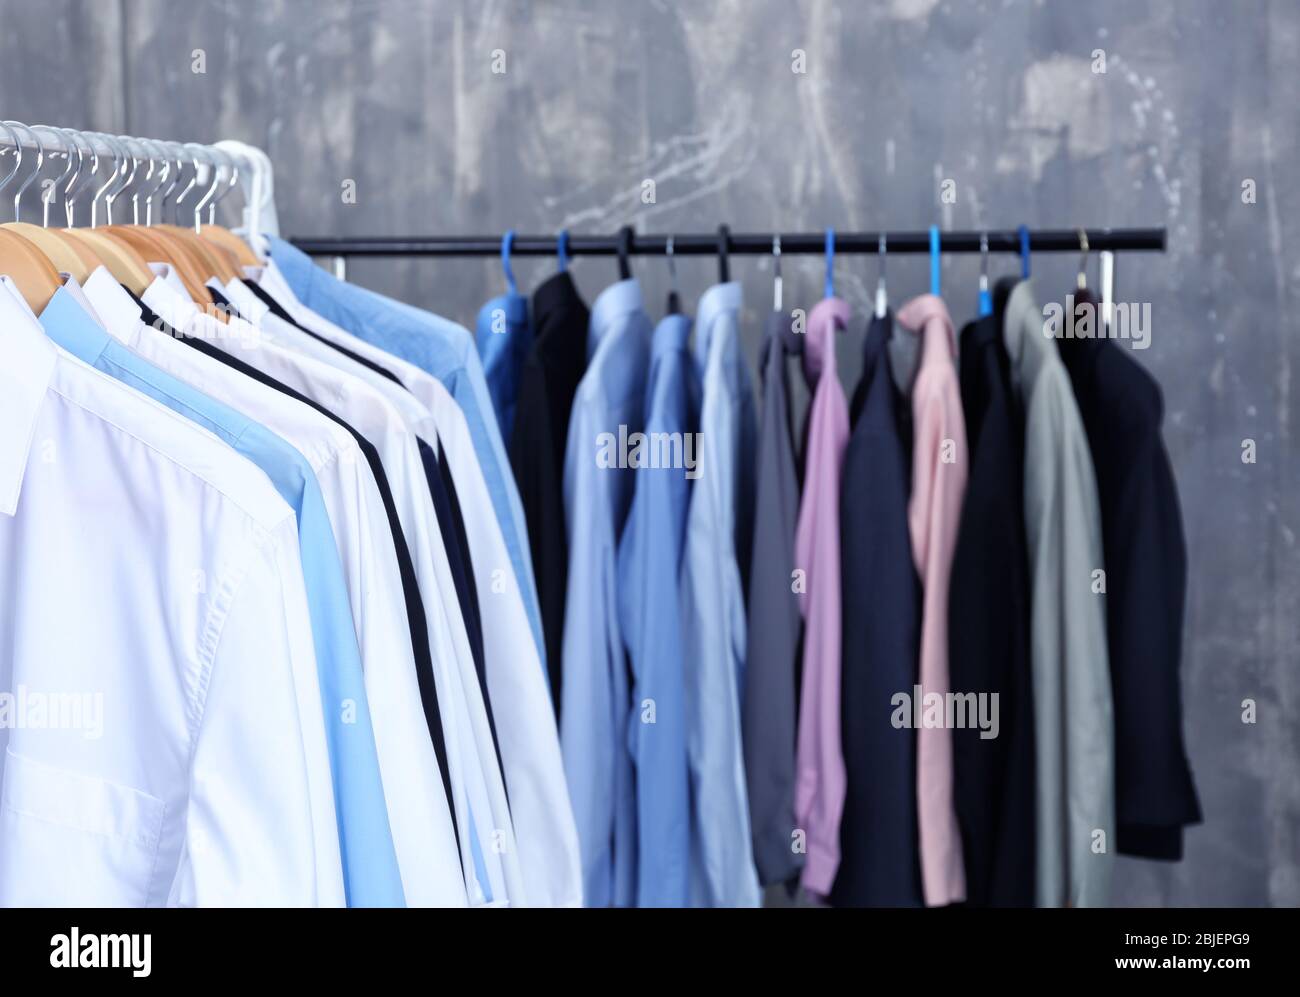 https://c8.alamy.com/comp/2BJEPG9/rack-of-clean-clothes-hanging-on-hangers-at-dry-cleaning-2BJEPG9.jpg